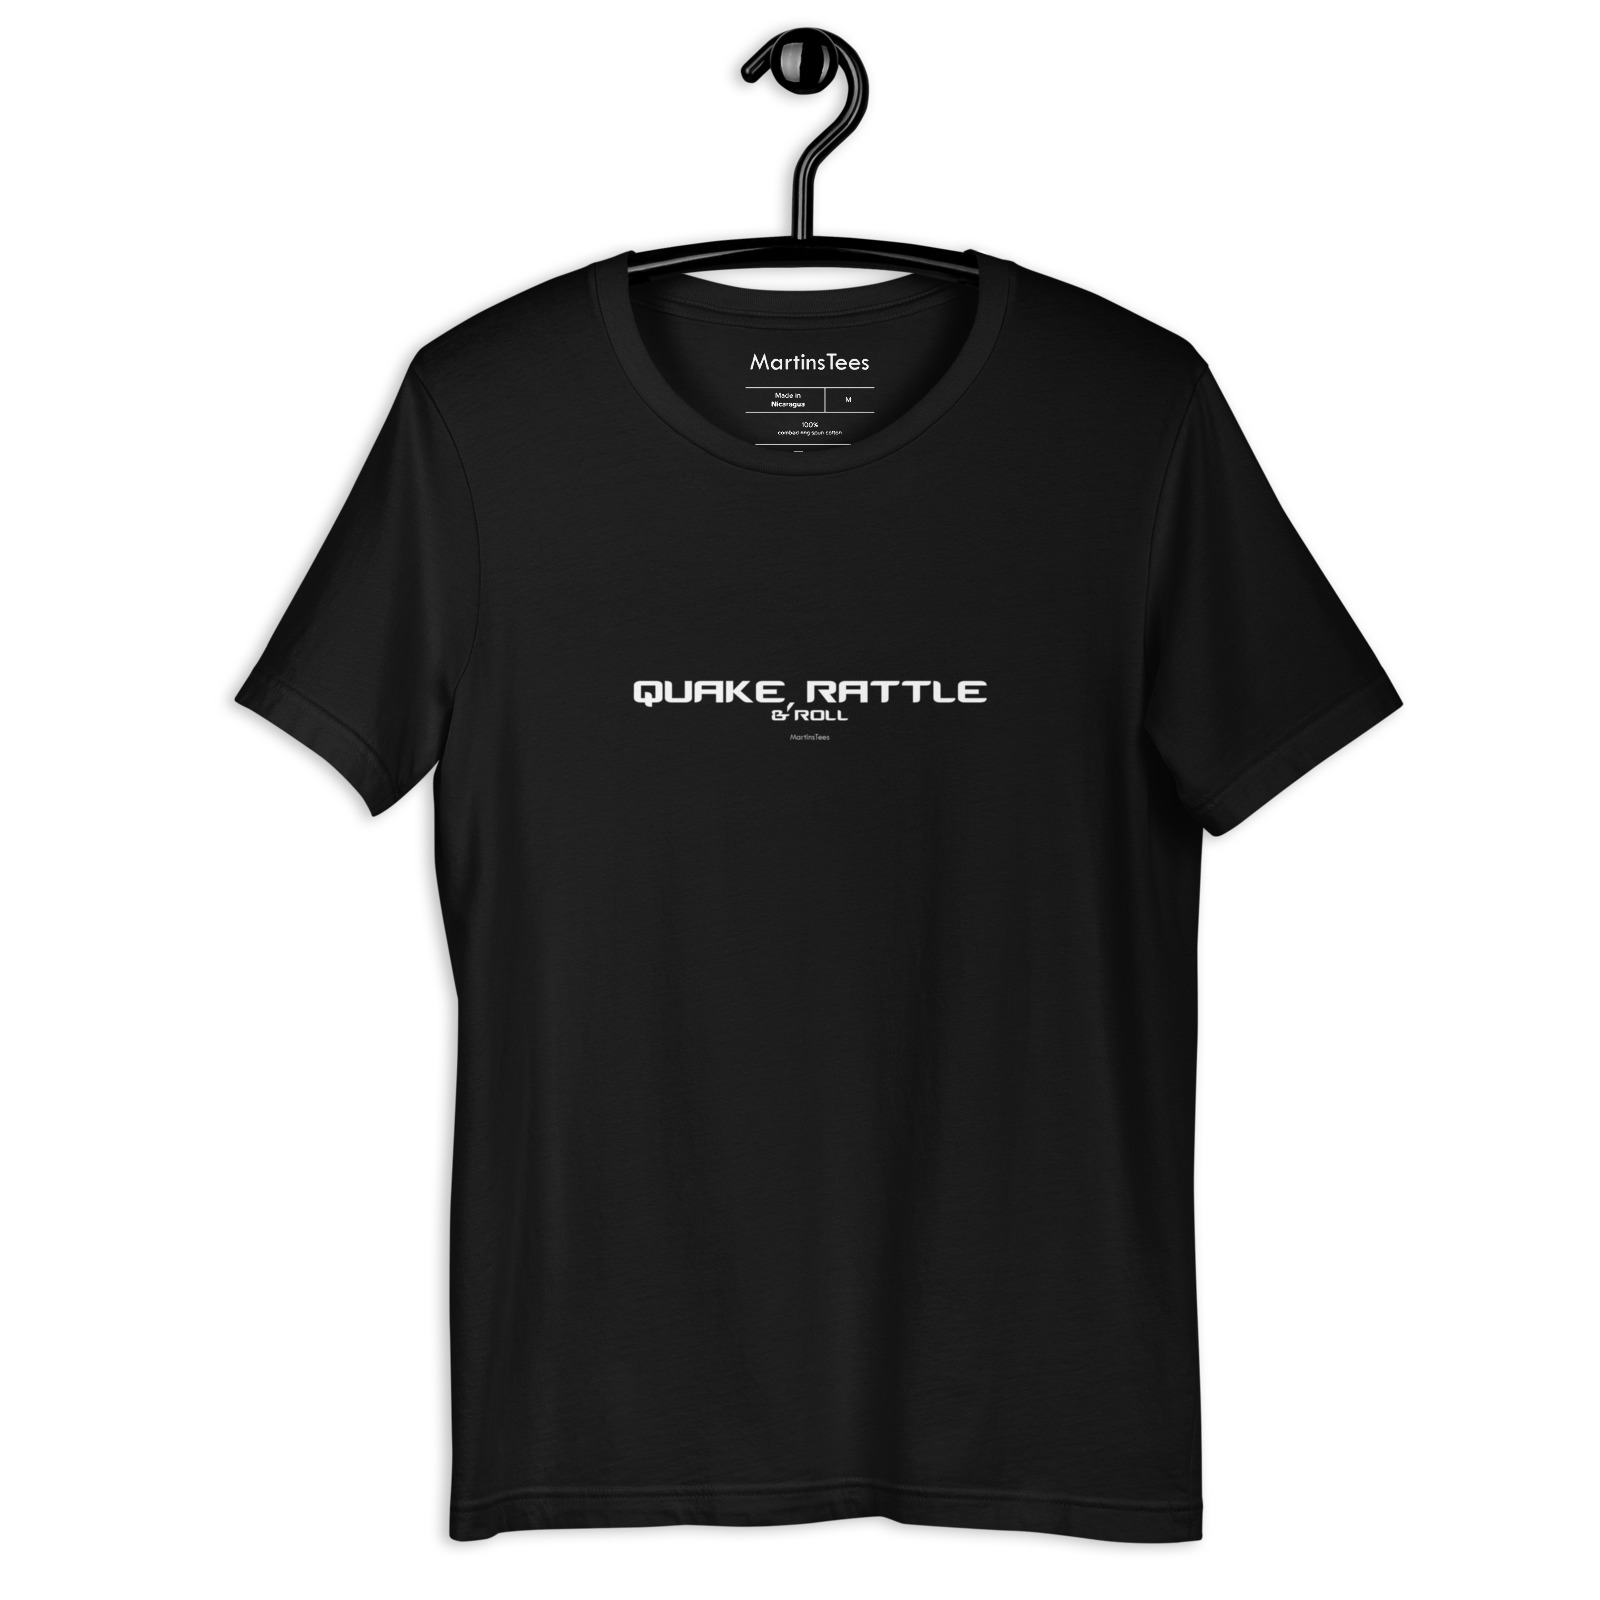 T-shirt: QUAKE, RATTLE - & ROLL